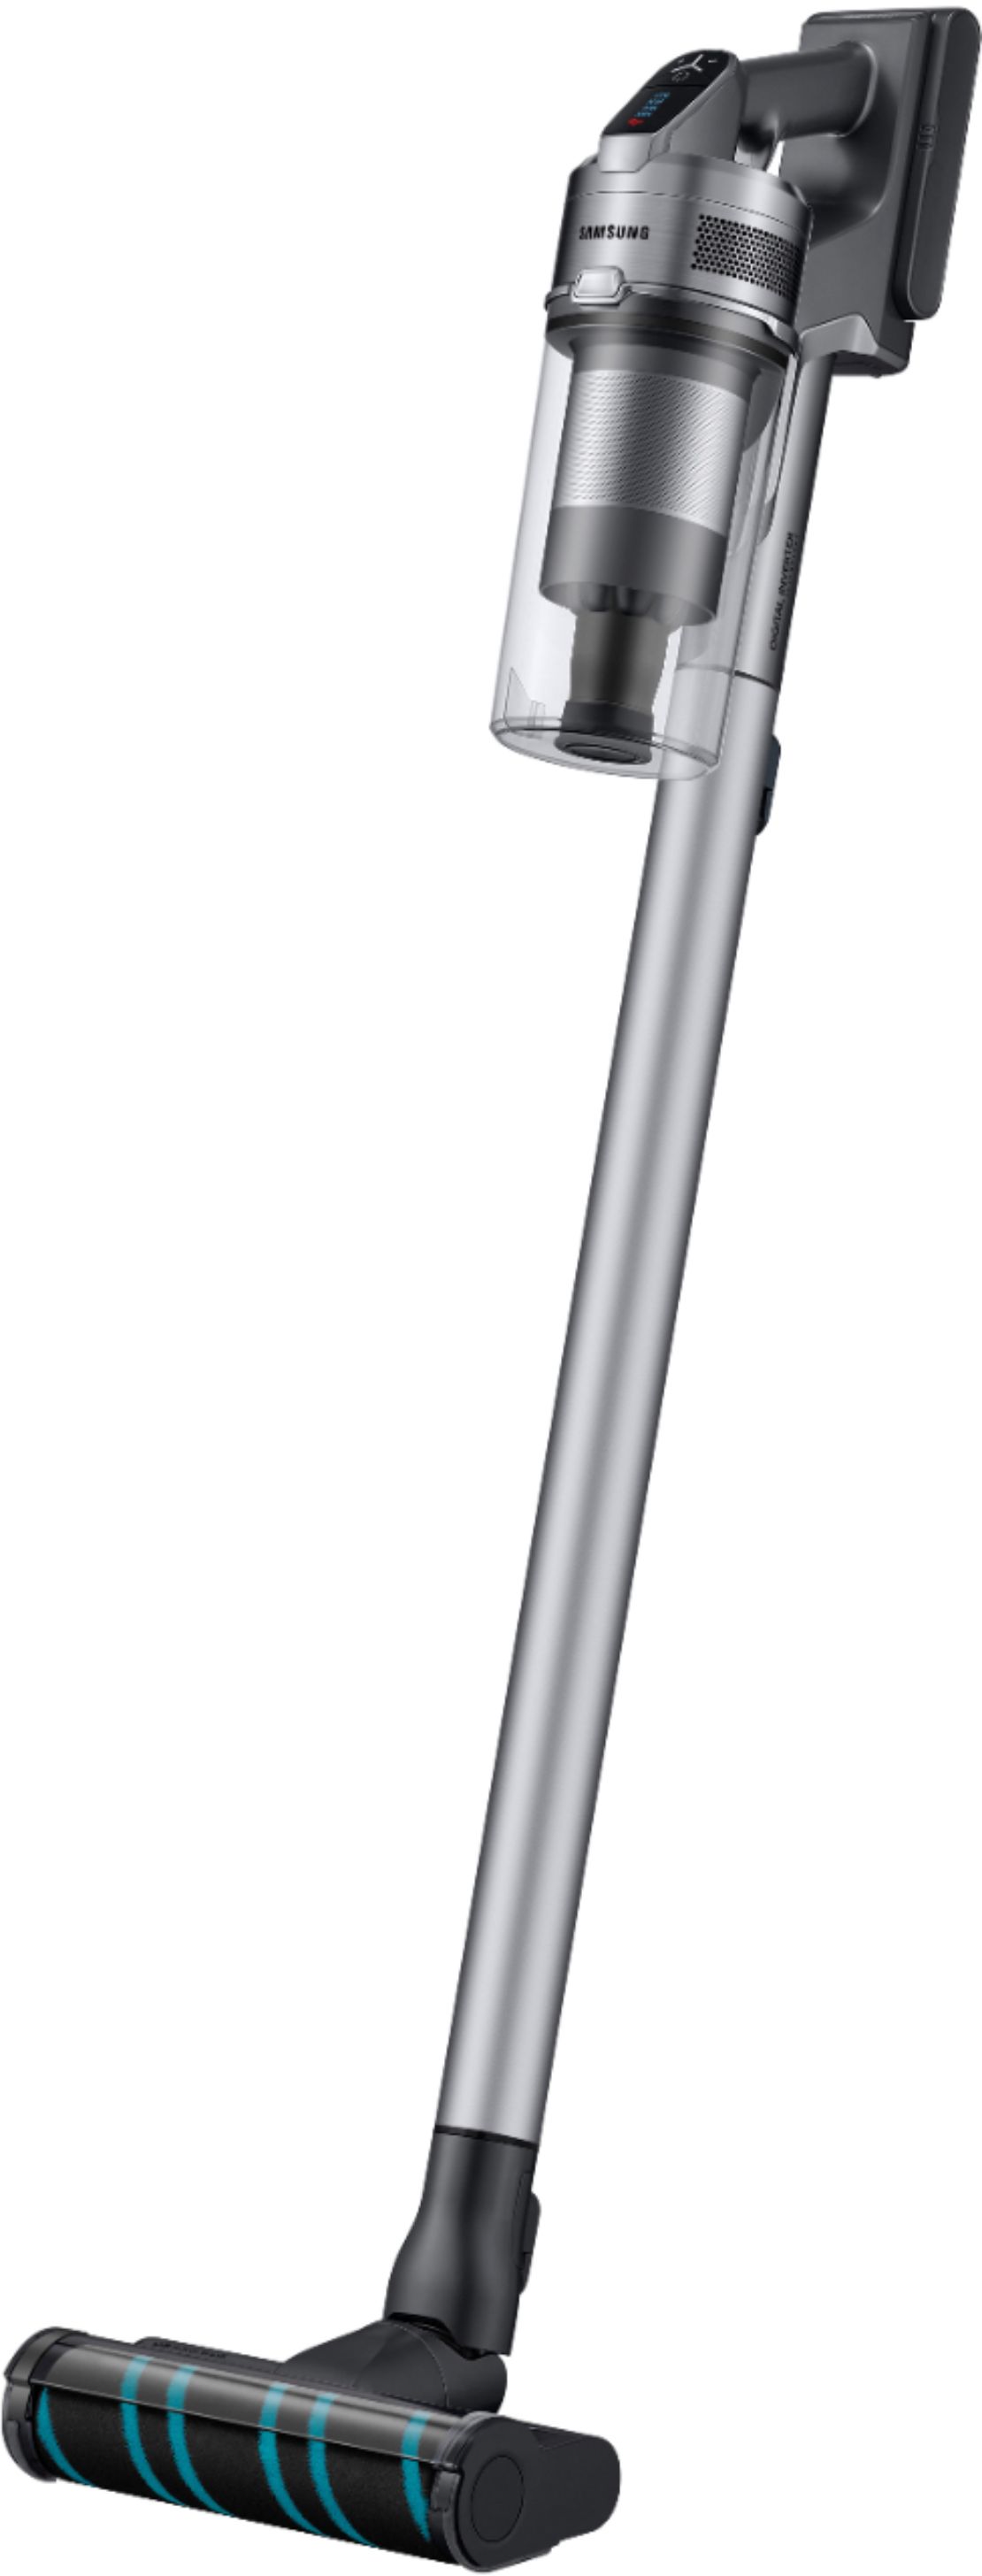 Samsung Jet™ 75 Complete Cordless Stick Vacuum Long-Lasting Battery ✅FAST SHIP✅ 